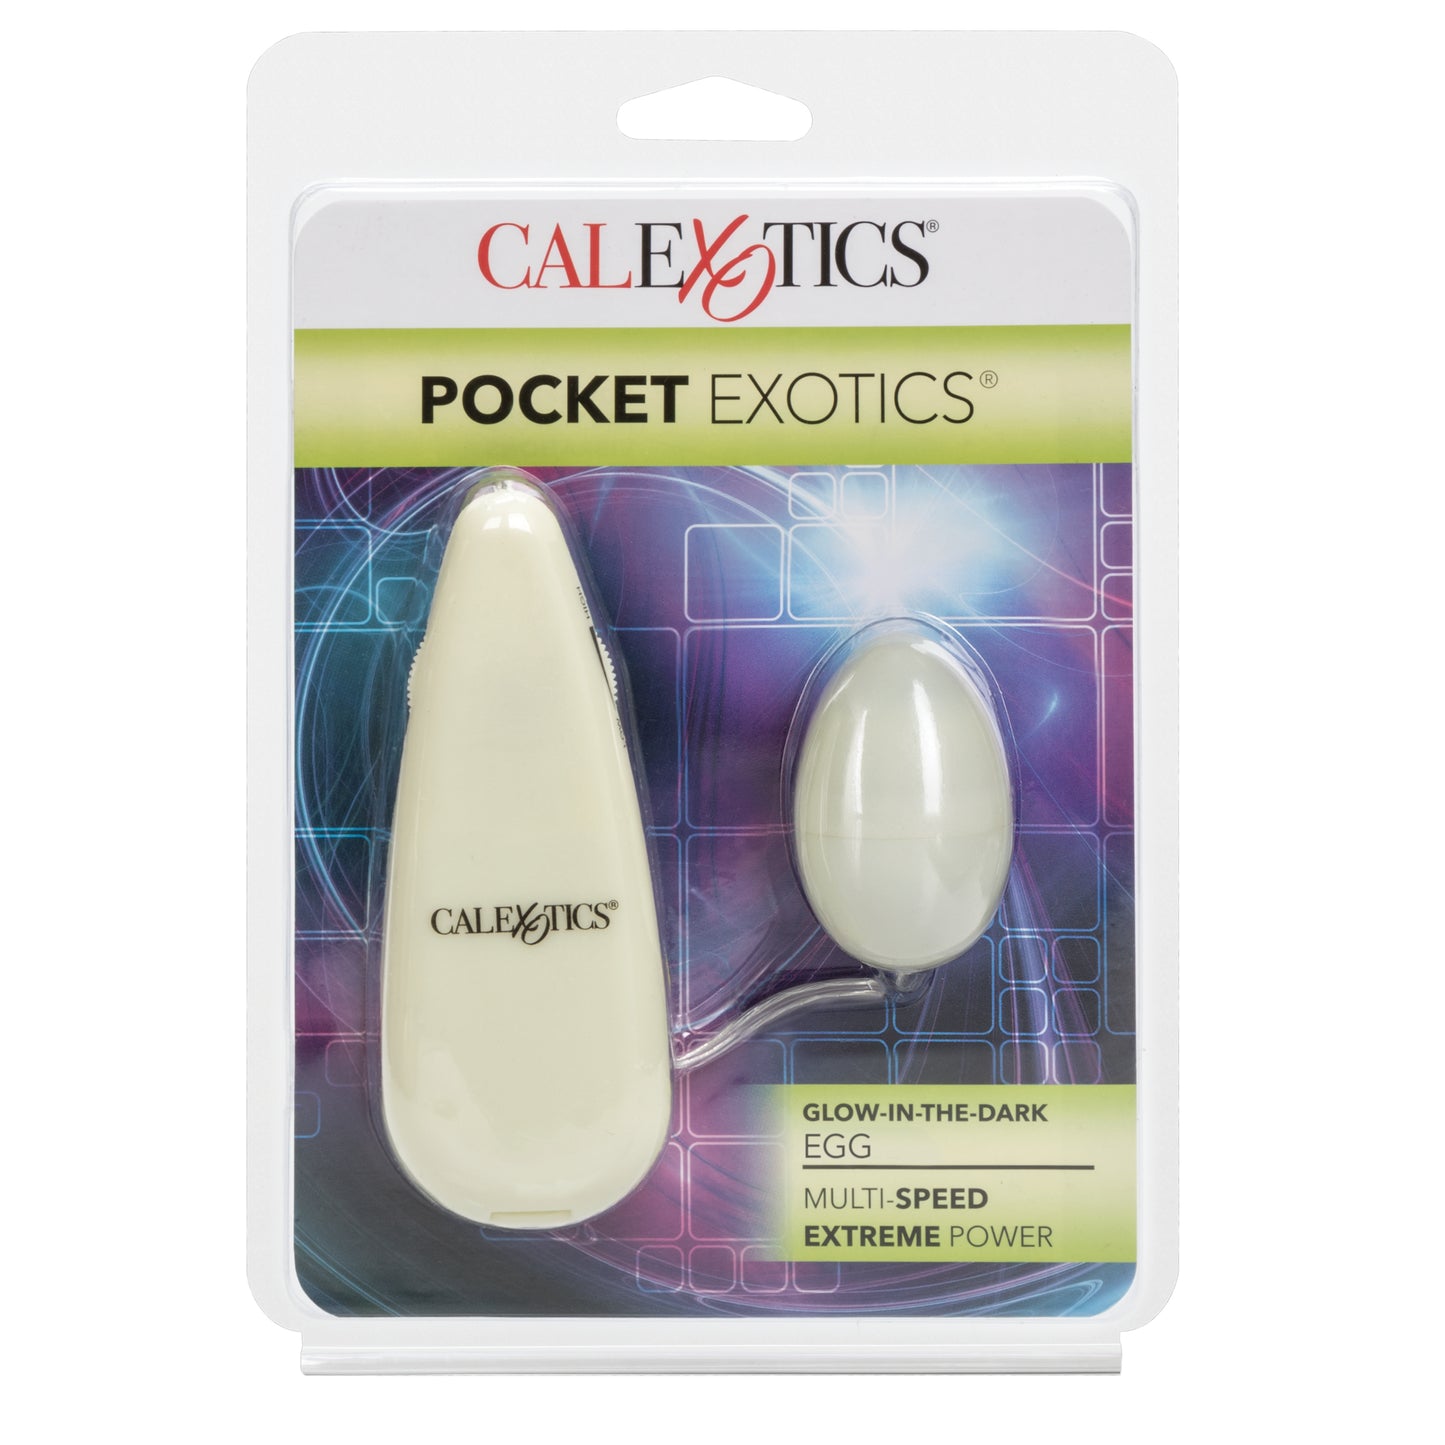 Pocket Exotics® Glow-in-the-Dark Egg